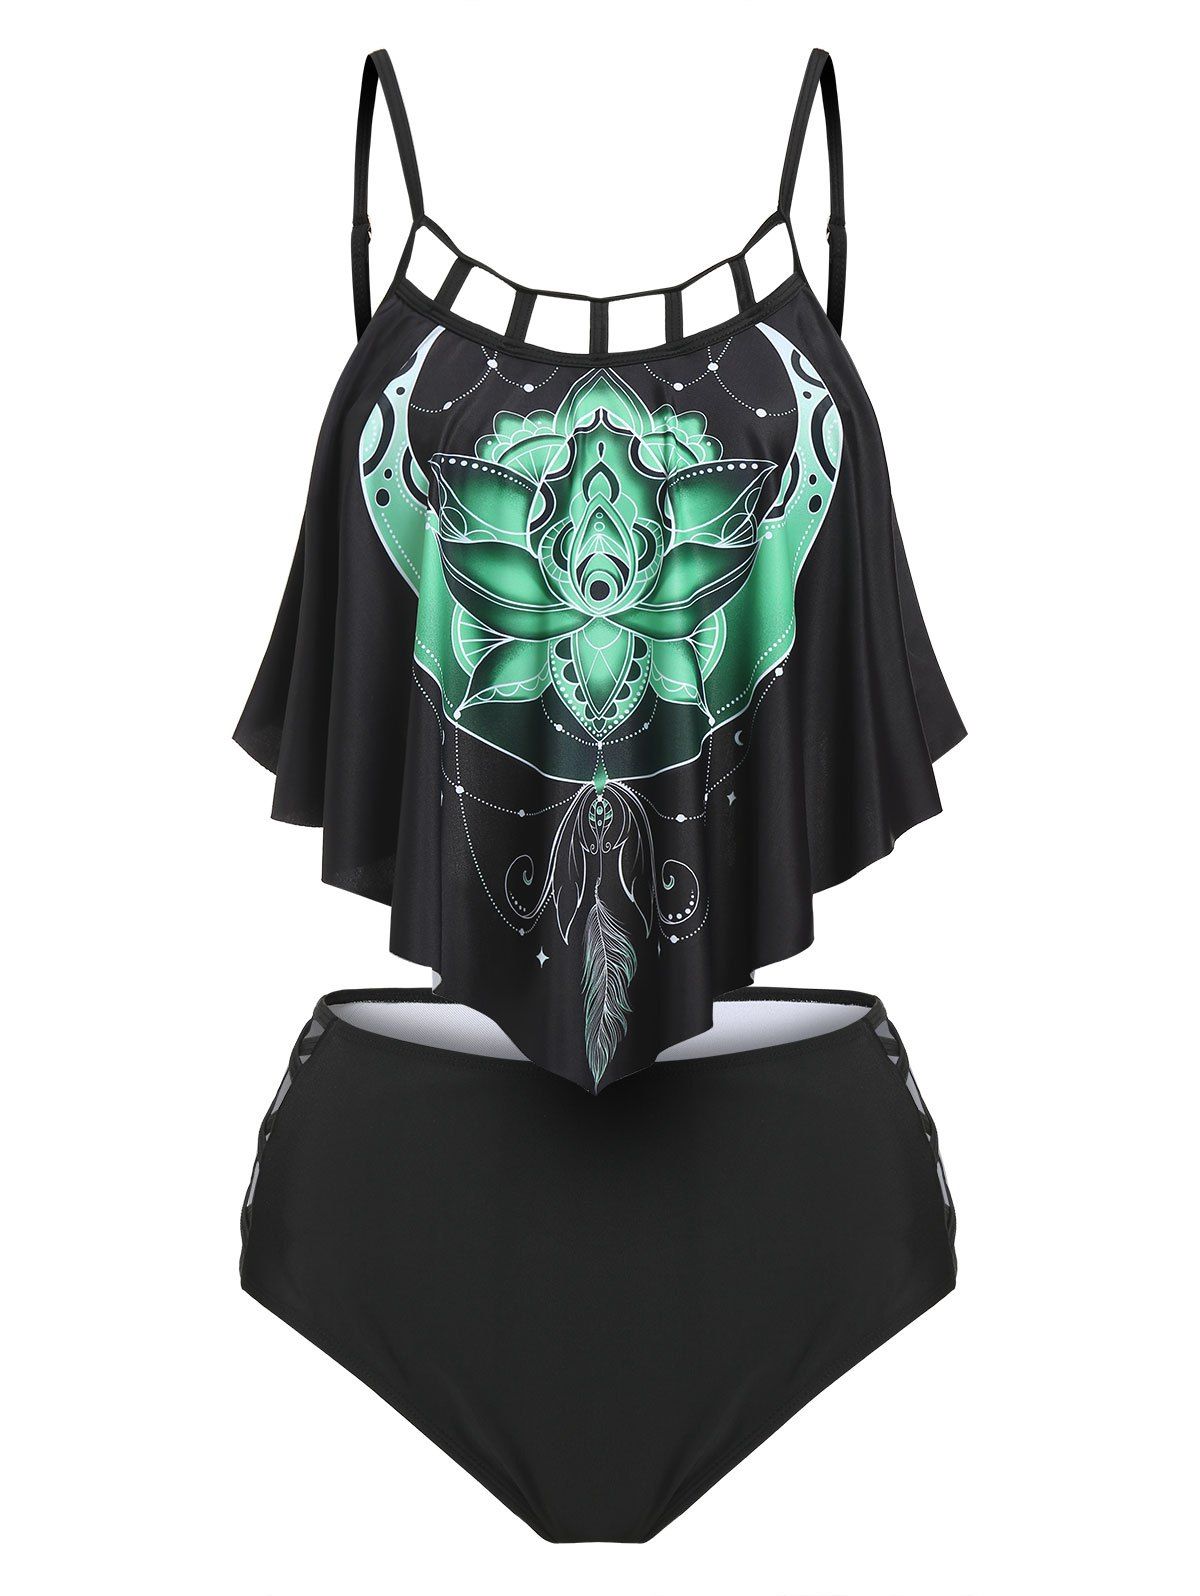 Bohemian Tankini Swimwear Tummy Control Swimsuit Flower Print Flounce Cutout High Rise Beach Bathing Suit - BLACK L